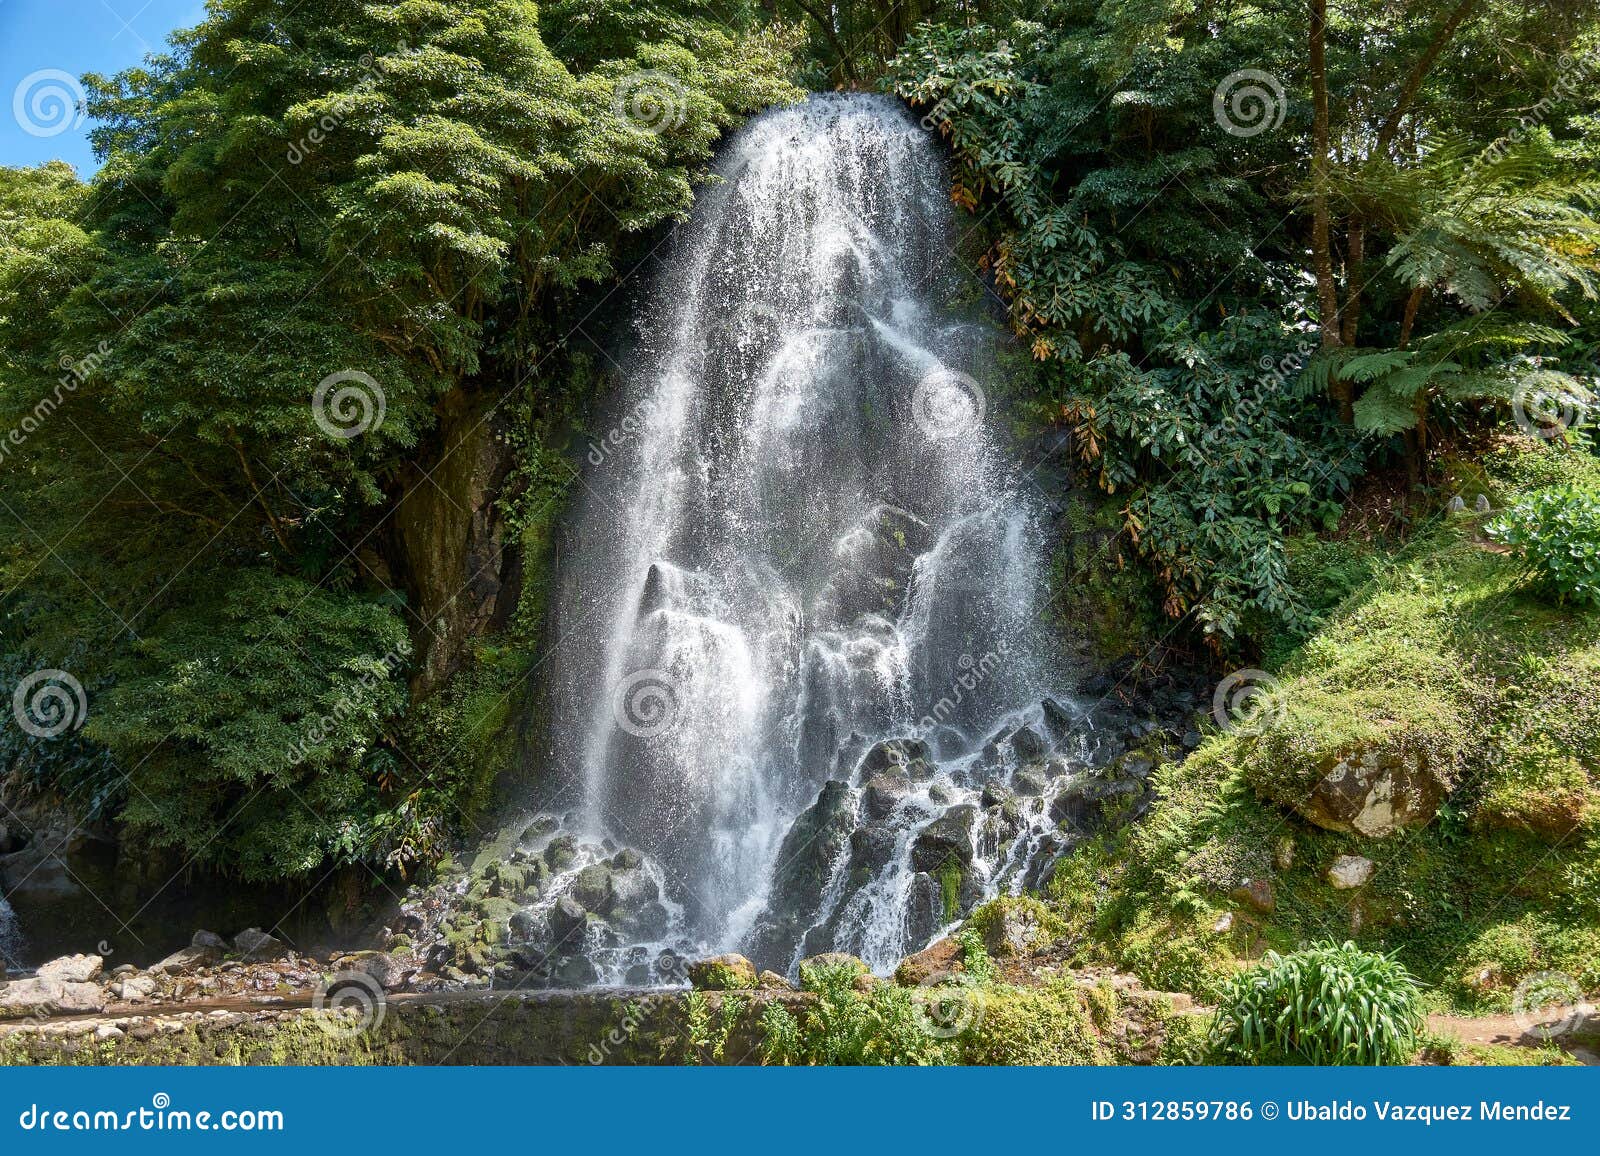 biggest waterfall at parque natural da ribeira dos caldeiroes, sao miguel, azores, portugal